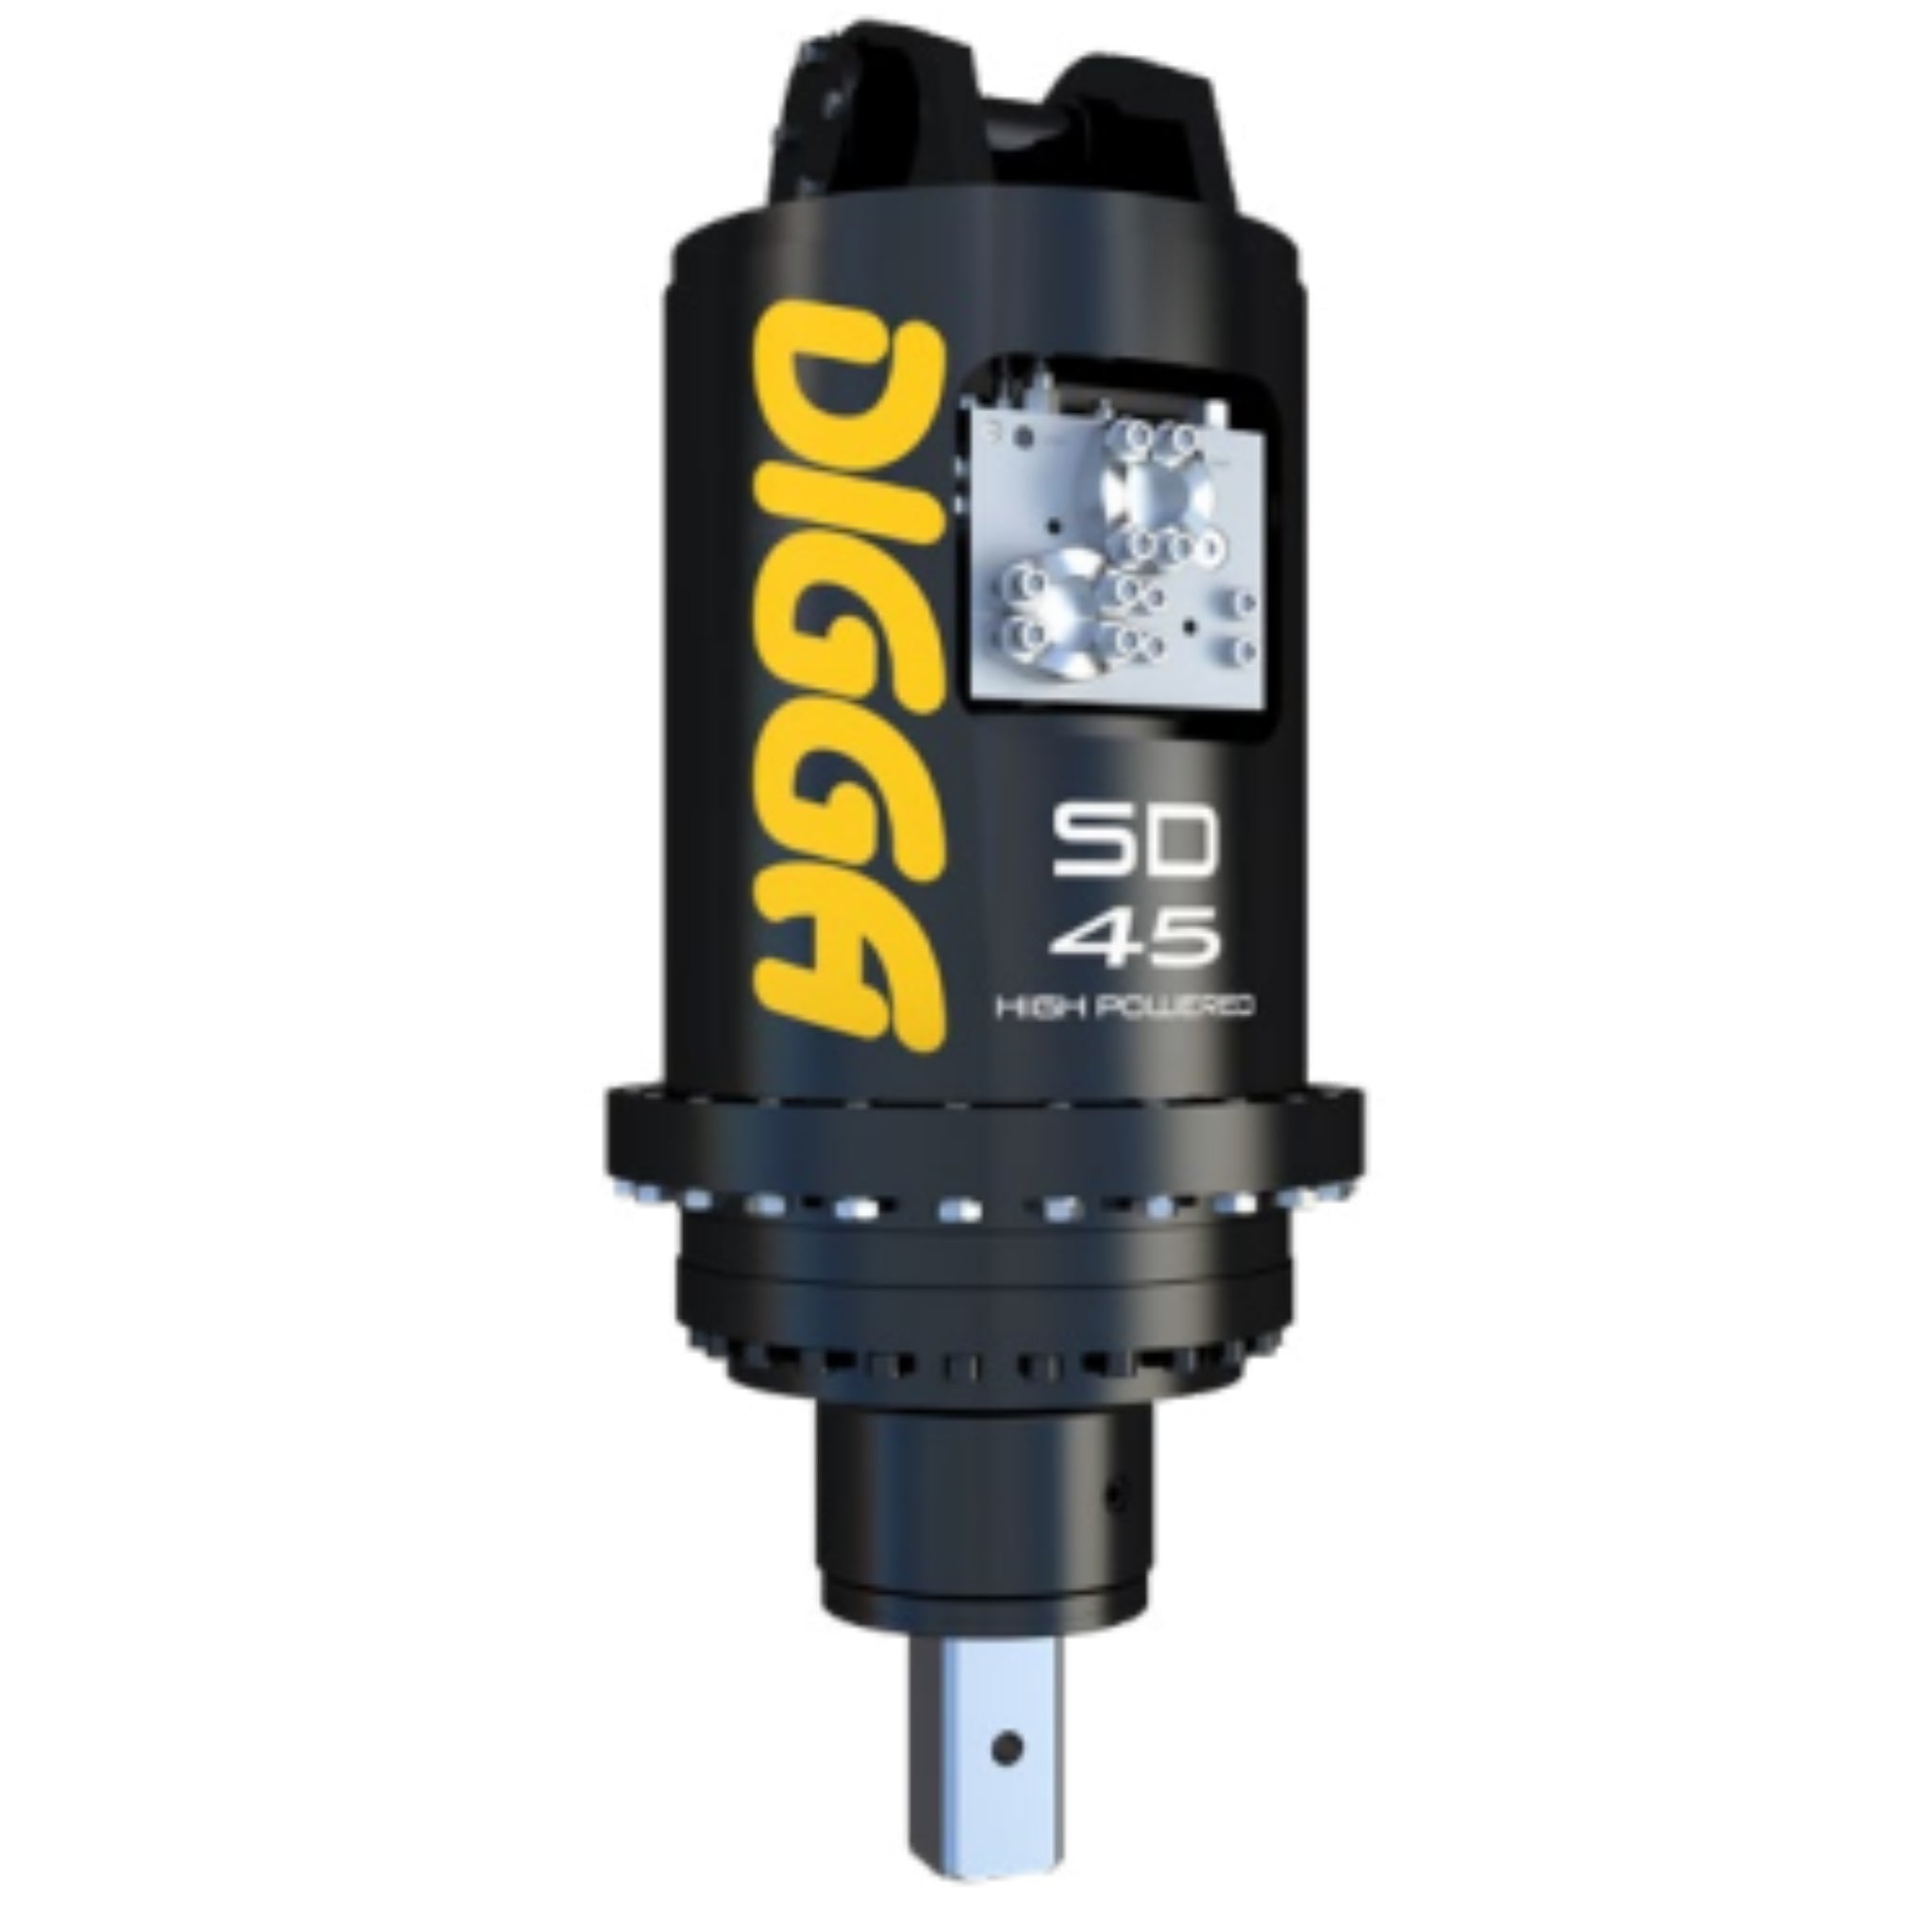 Digga SD95HPT 2 Speed High Powered "Supa" Anchoring Auger Drive